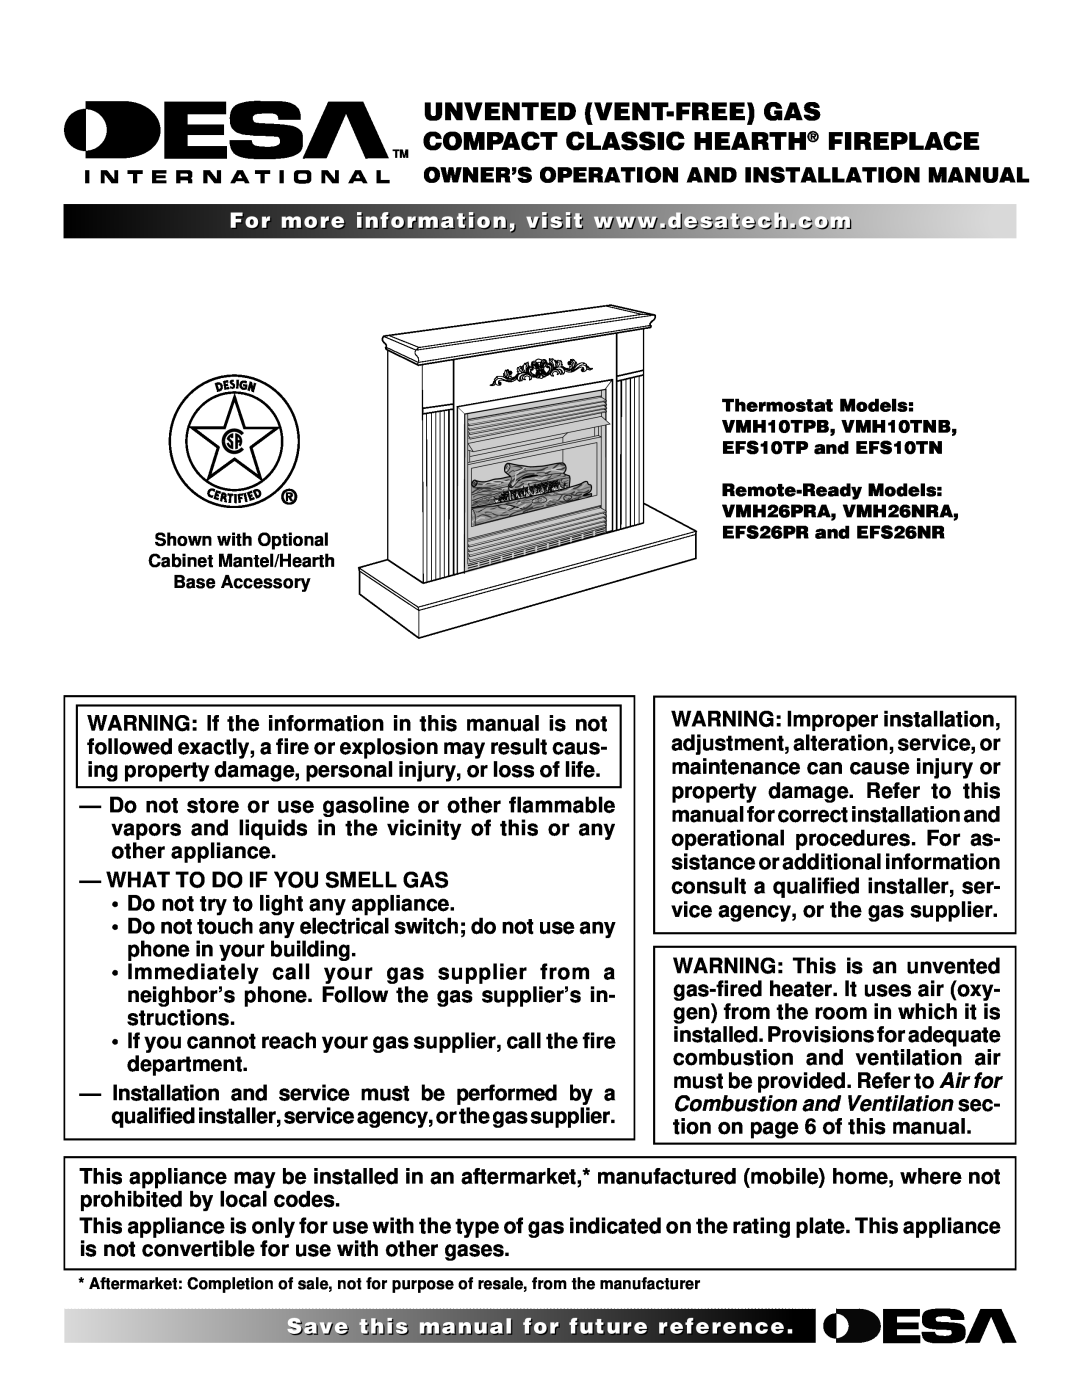 Desa VMH10TPB installation manual Owner’S Operation And Installation Manual, What To Do If You Smell Gas 